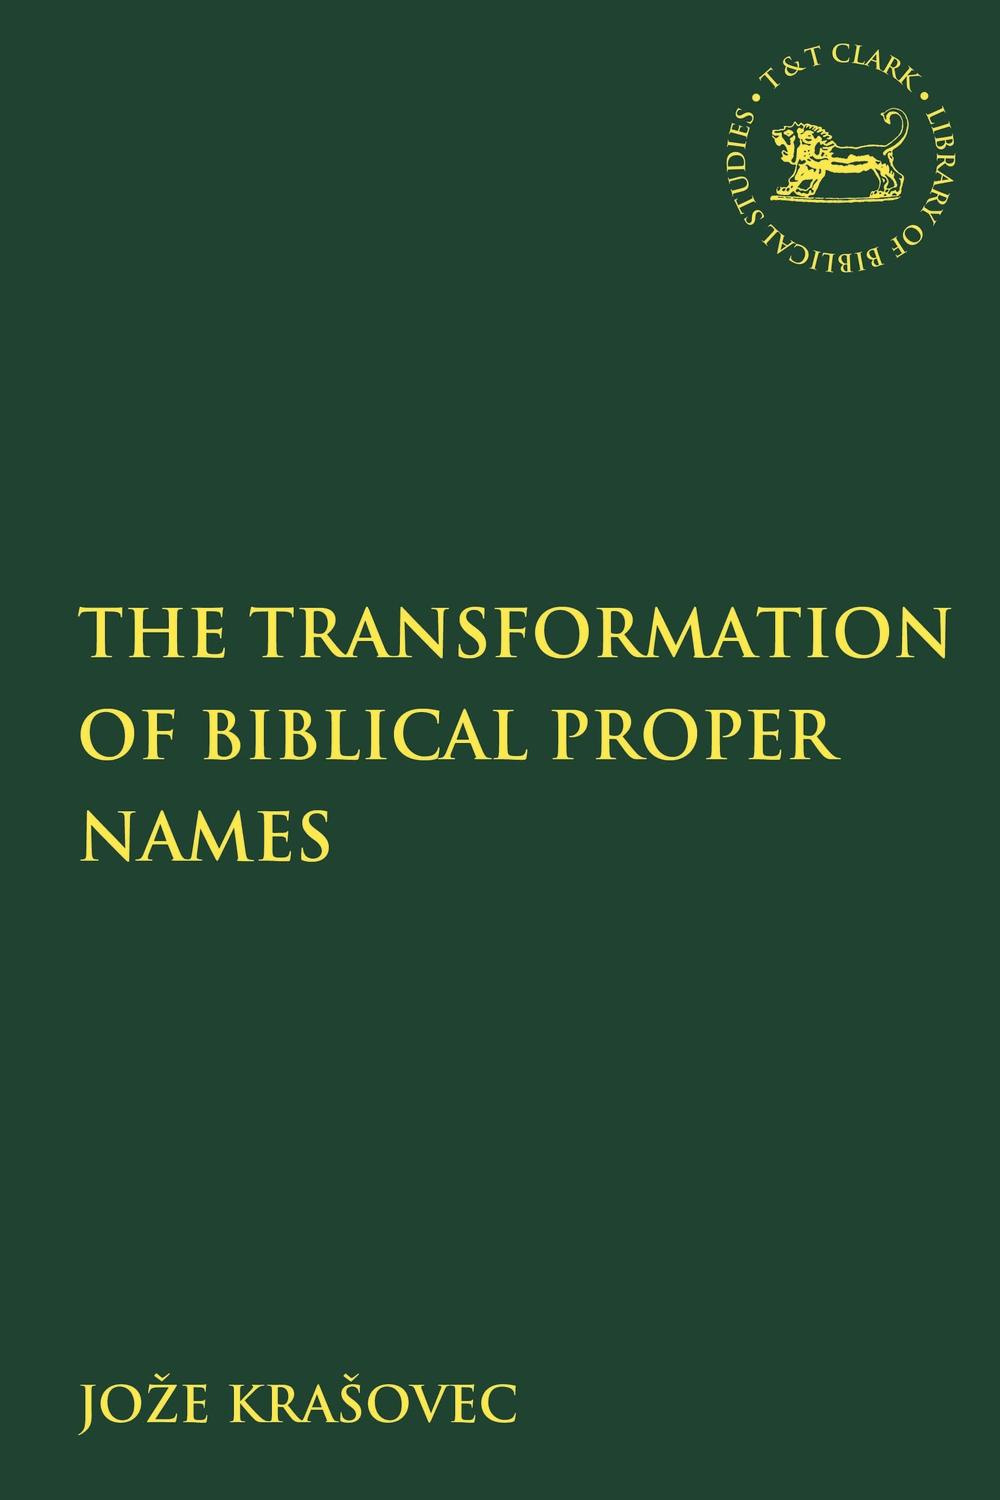 Transformation of Biblical Proper Names - Joze Krasovec